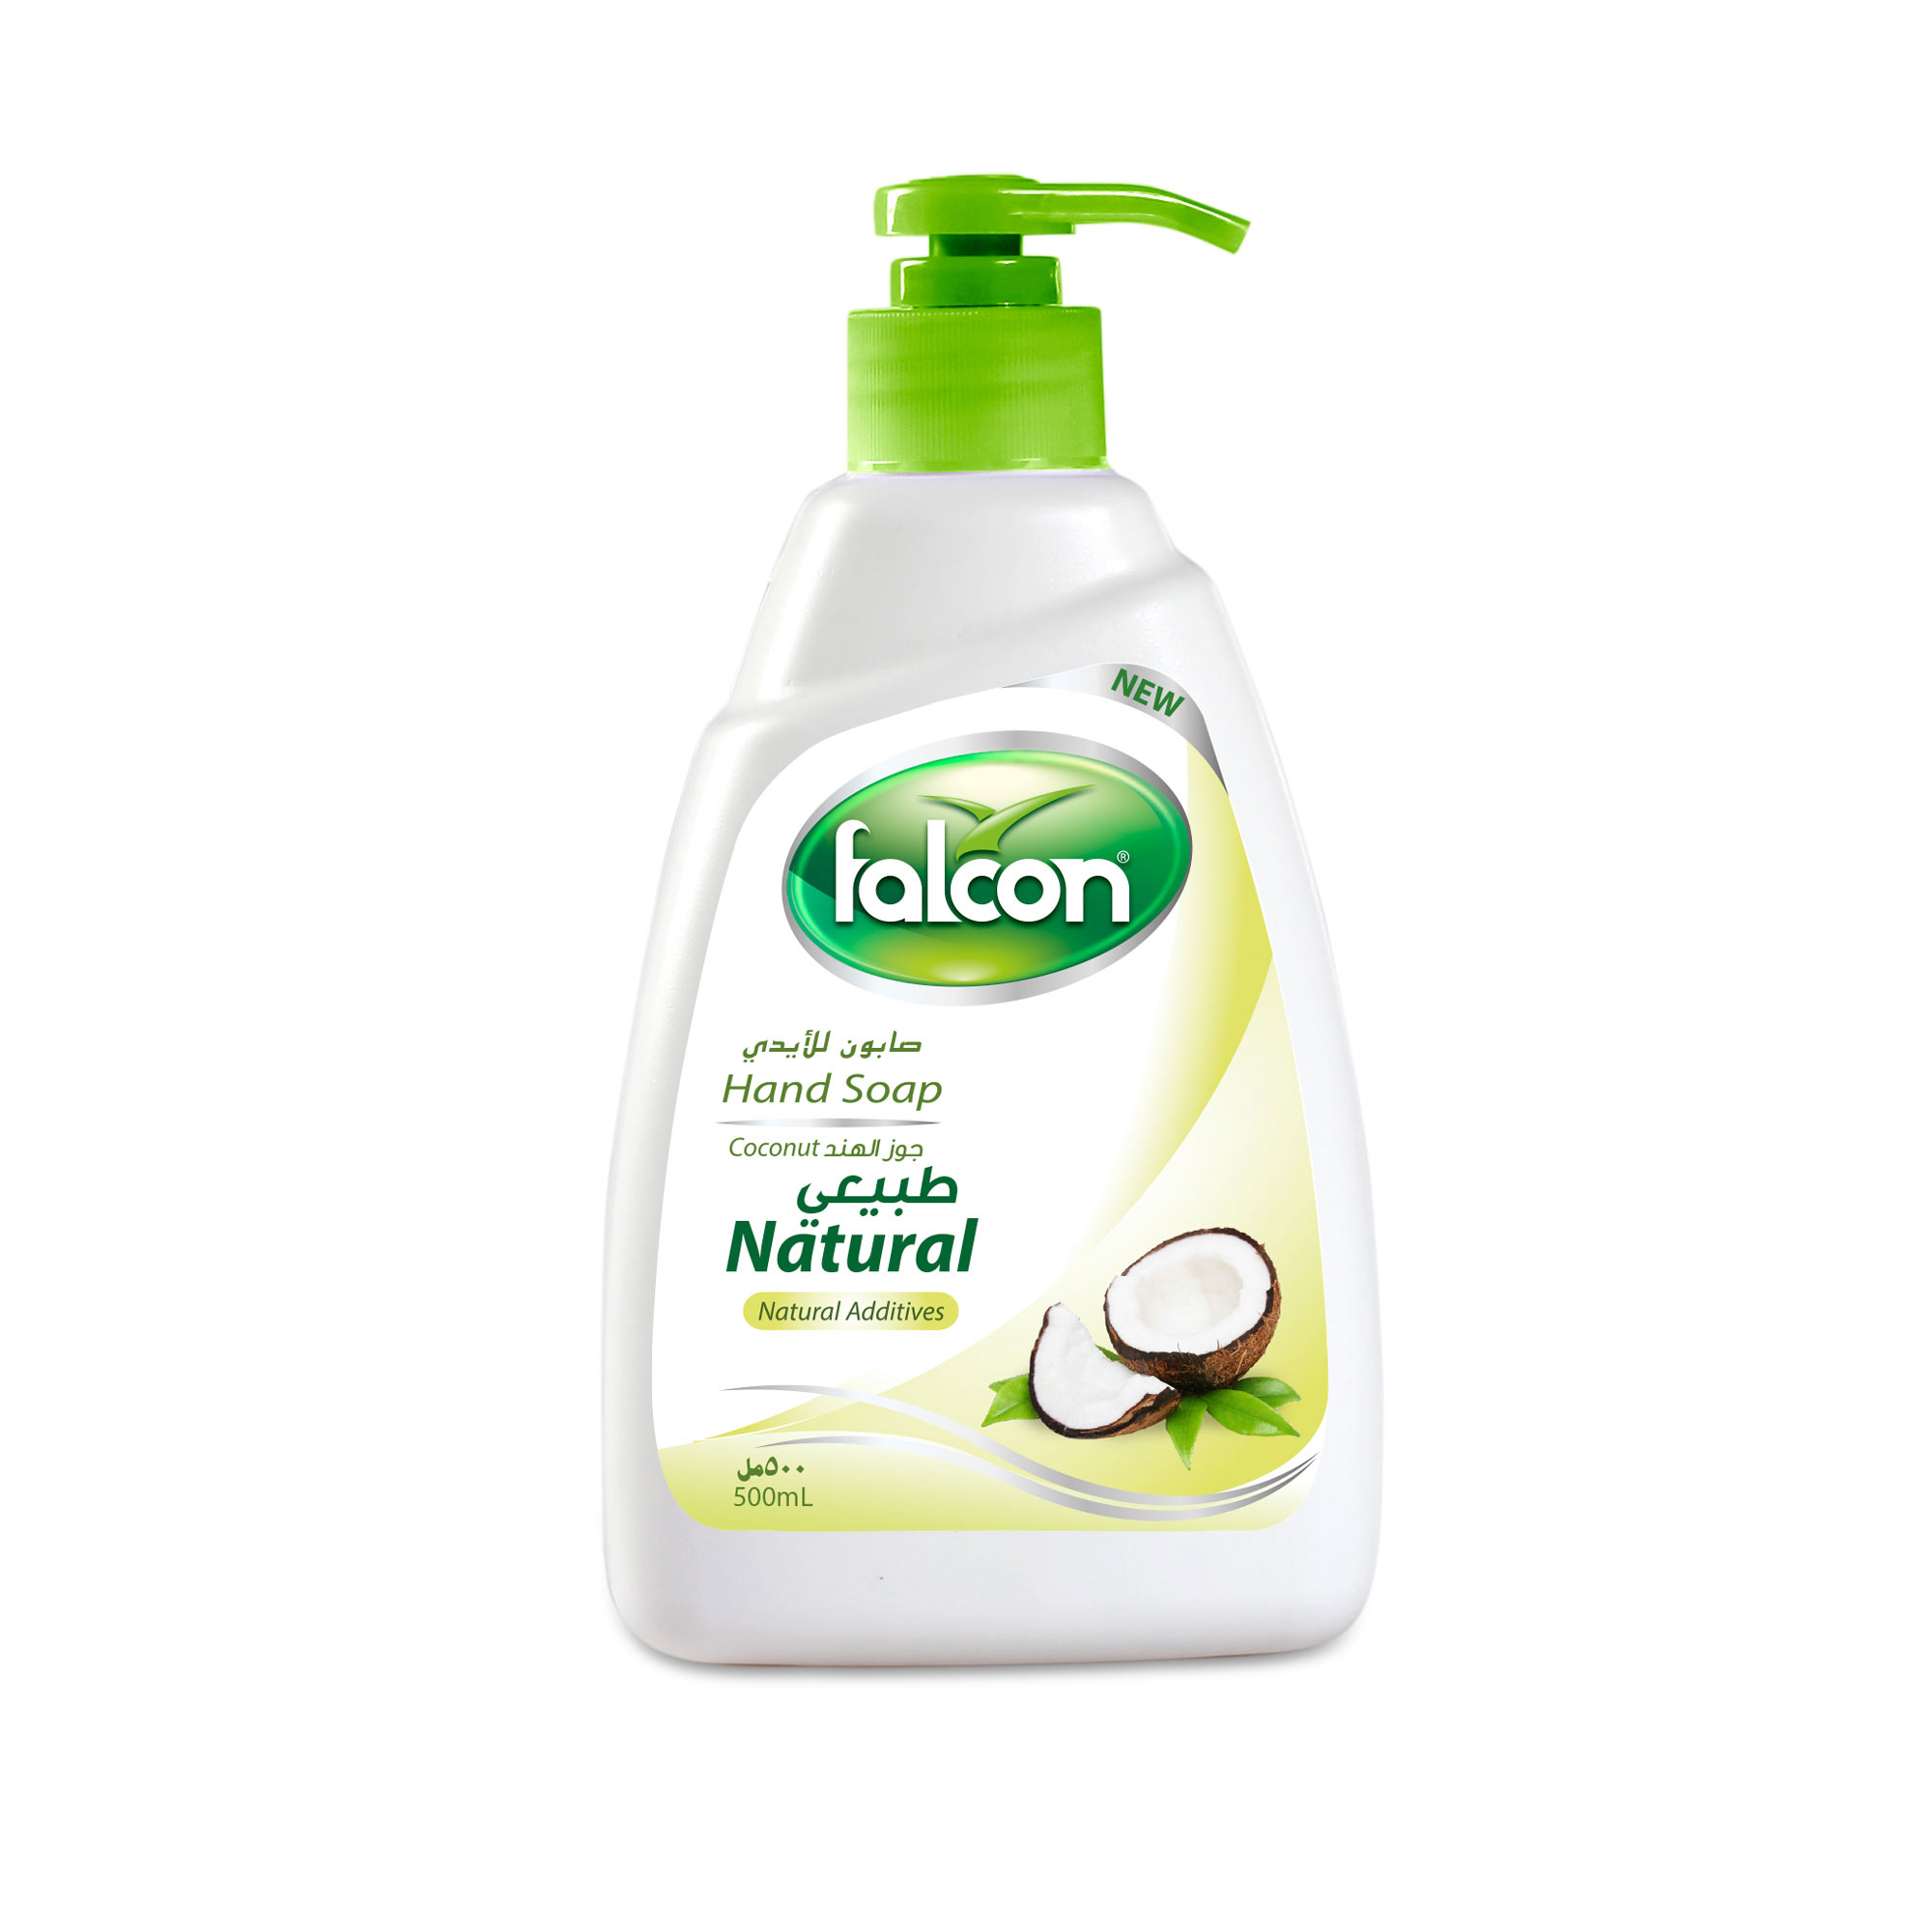 Falcon Natural Hand Soap Liquid (Coconut, 500 ml Bottle)